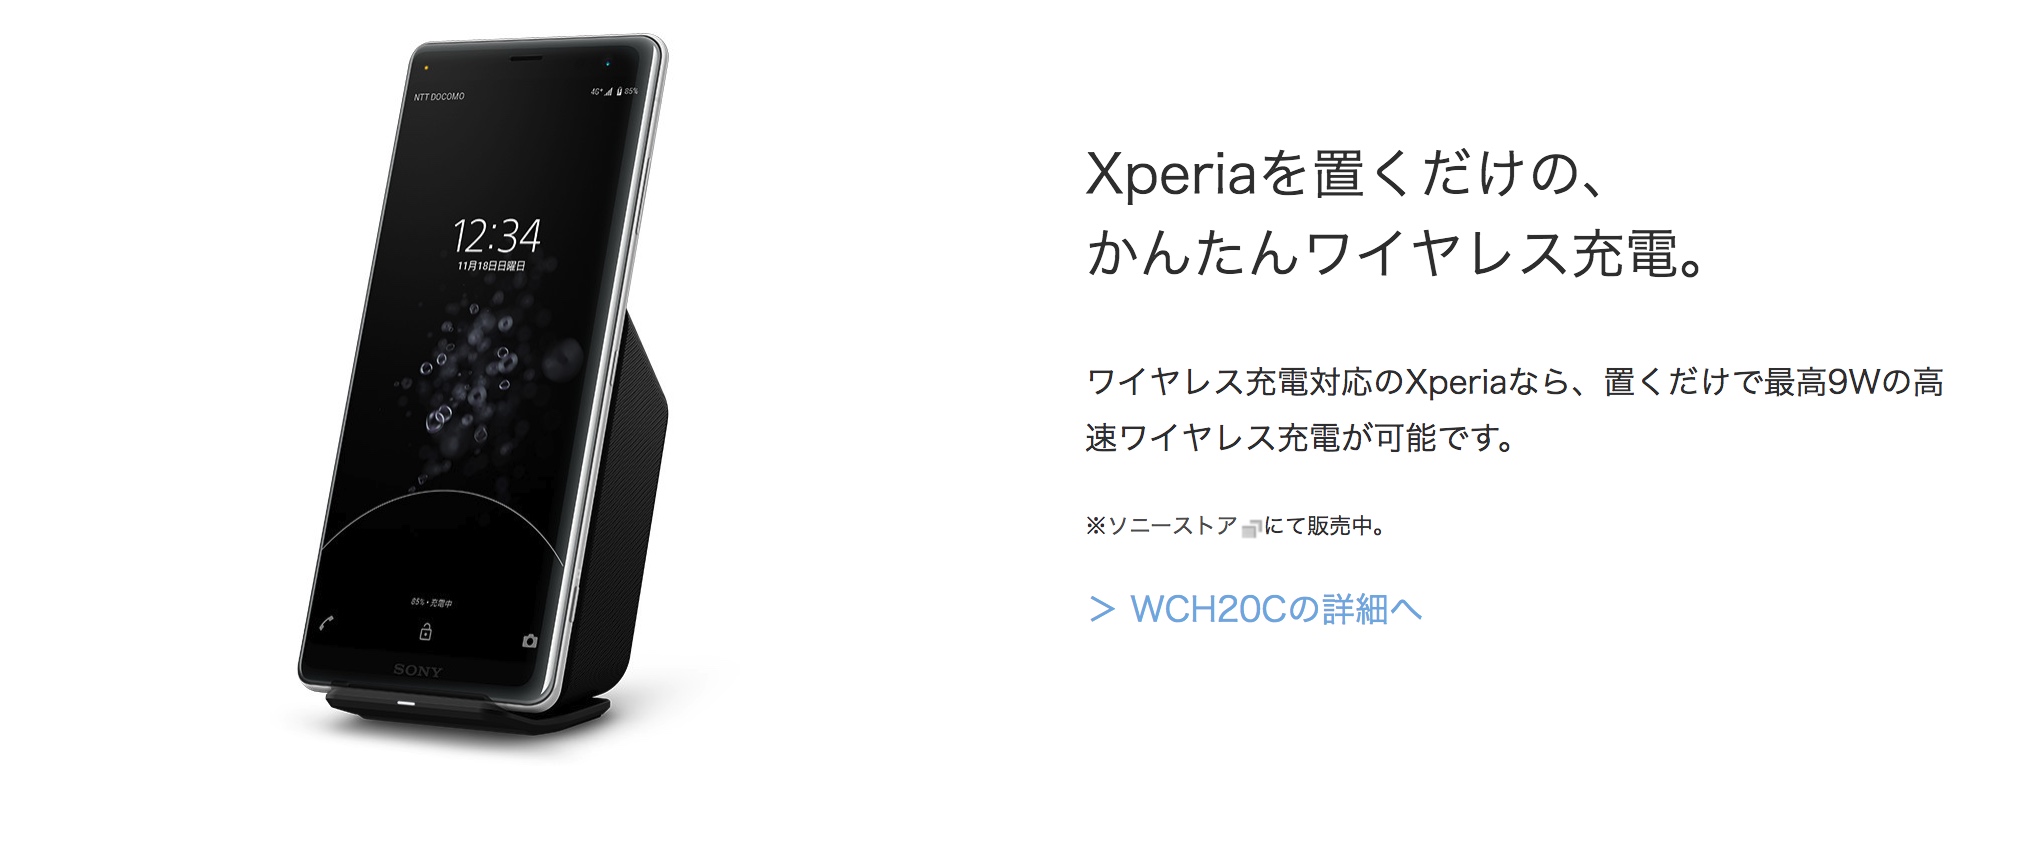 Xperia XZ3は純正のワイヤレスチャージャーもリリース予定